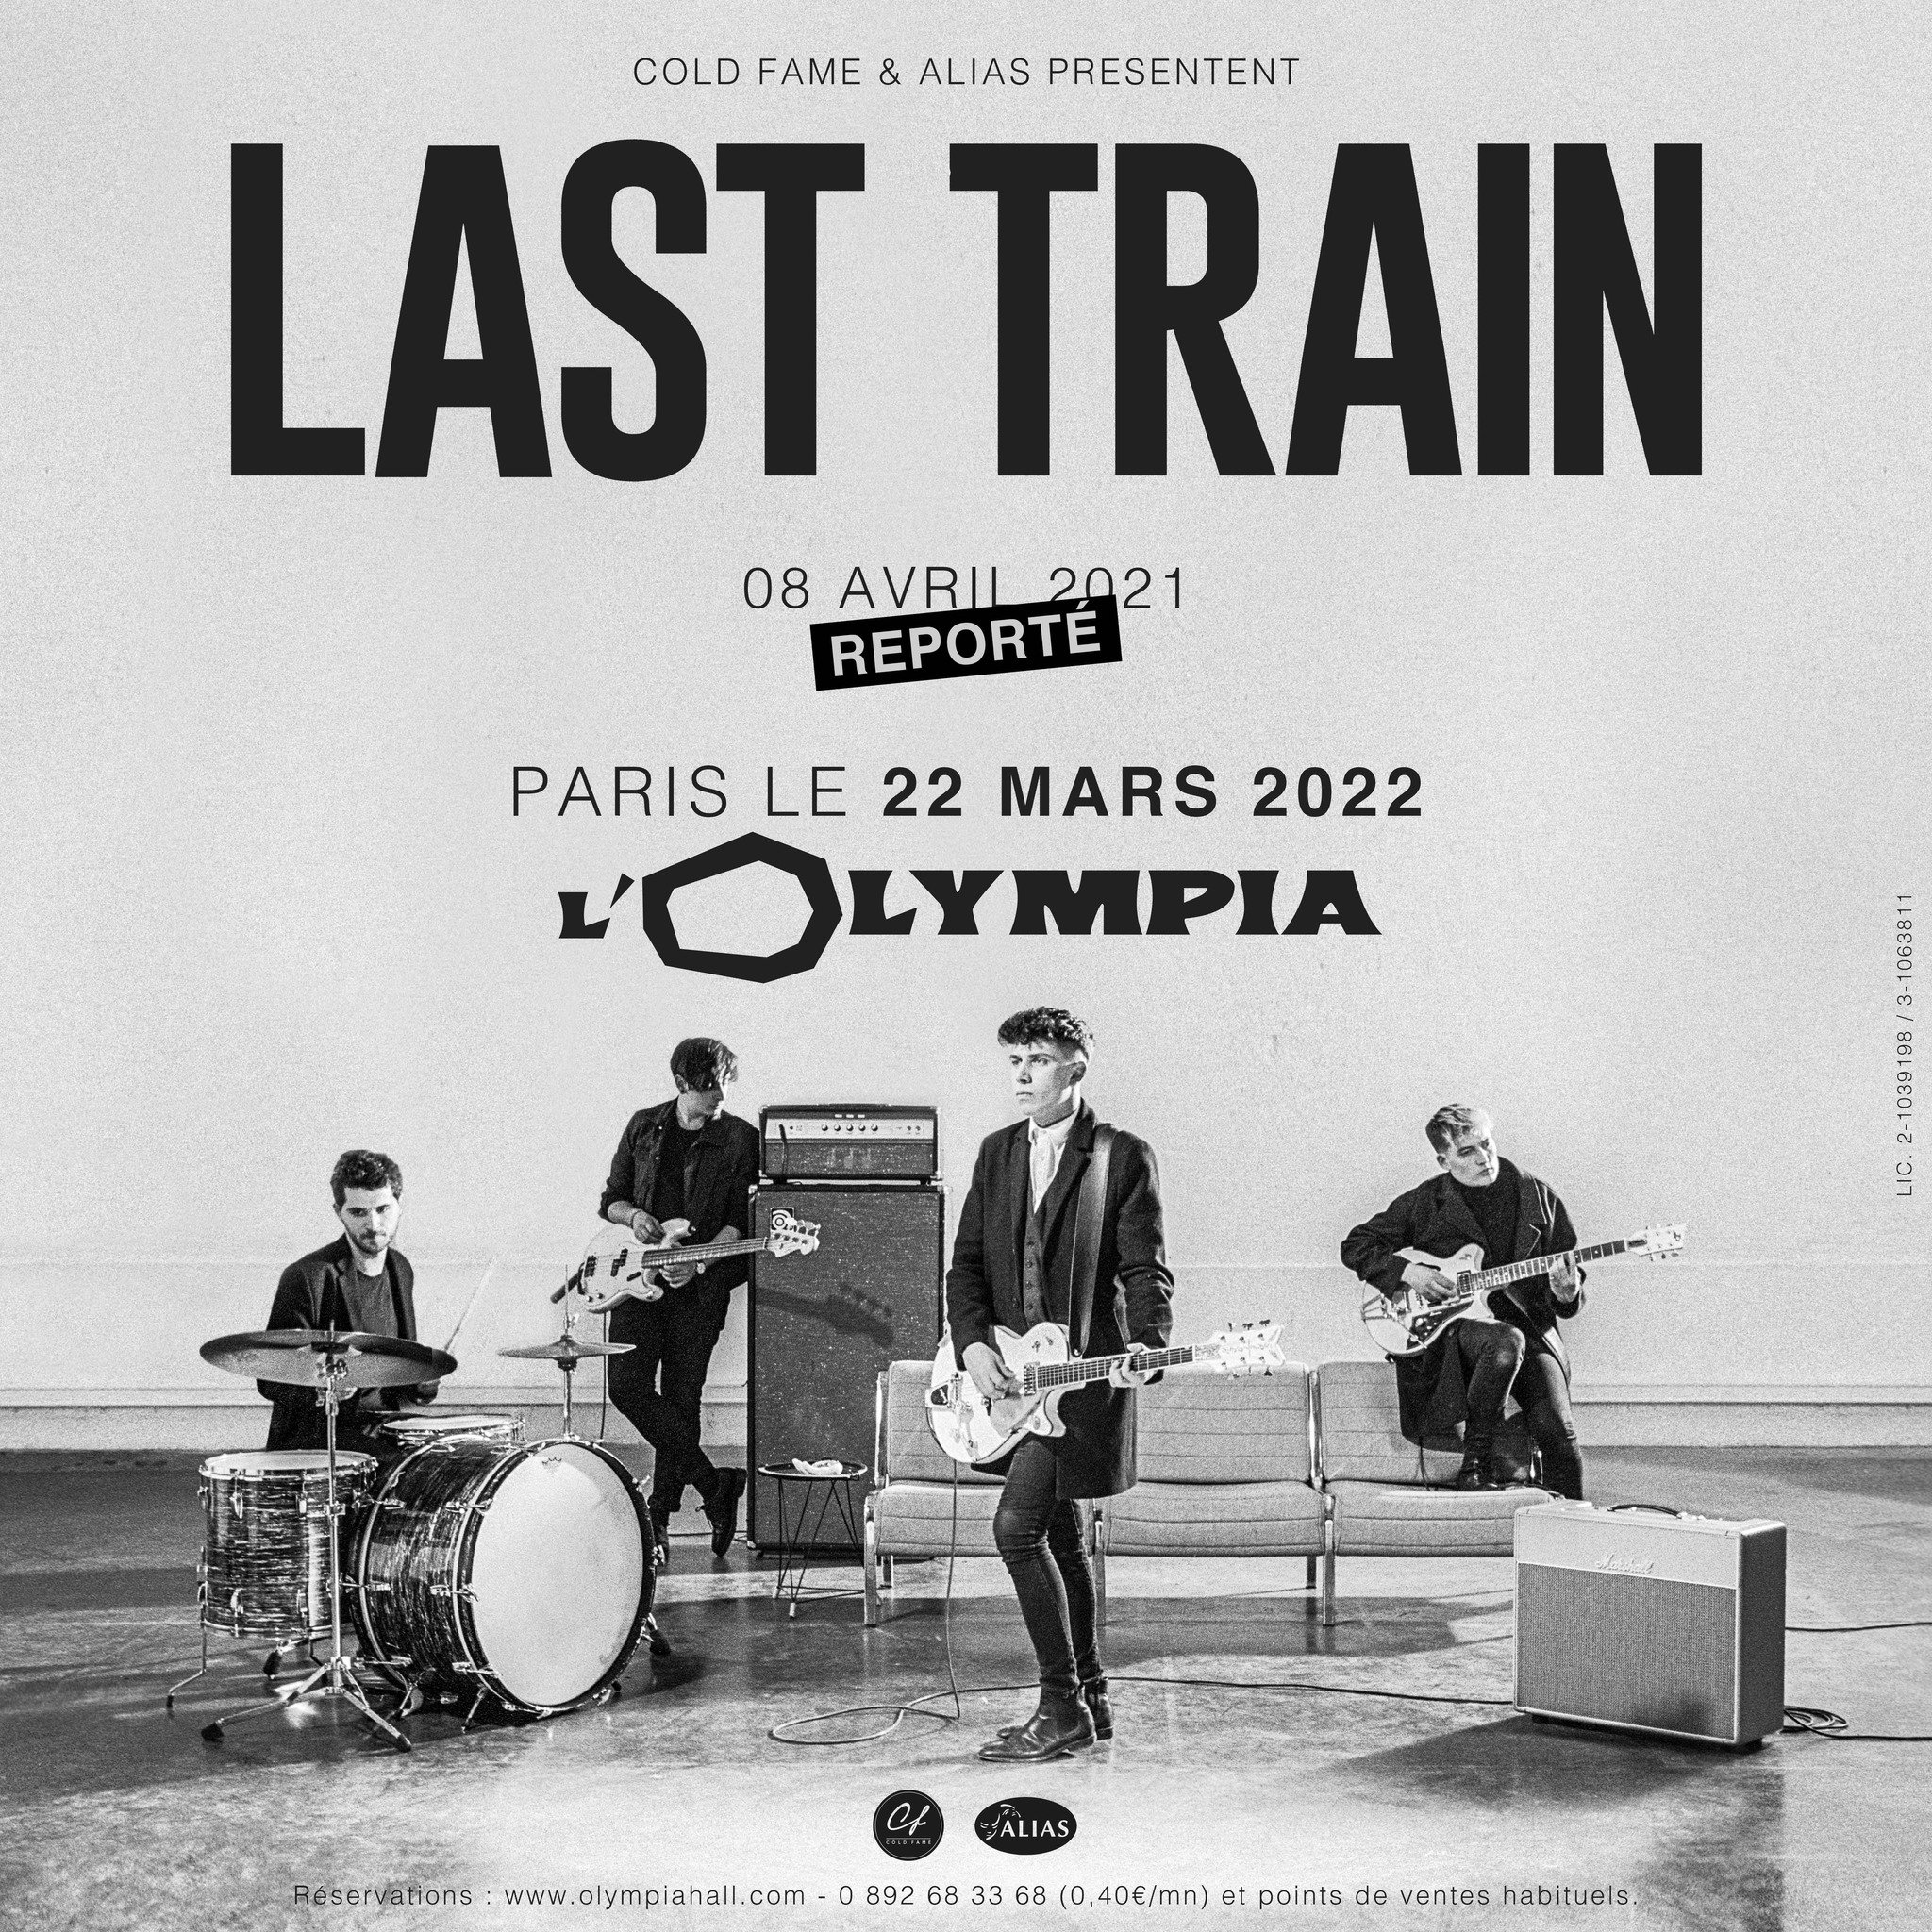 Last Train @ L’Olympia (Paris) le 22 Mars 2022 